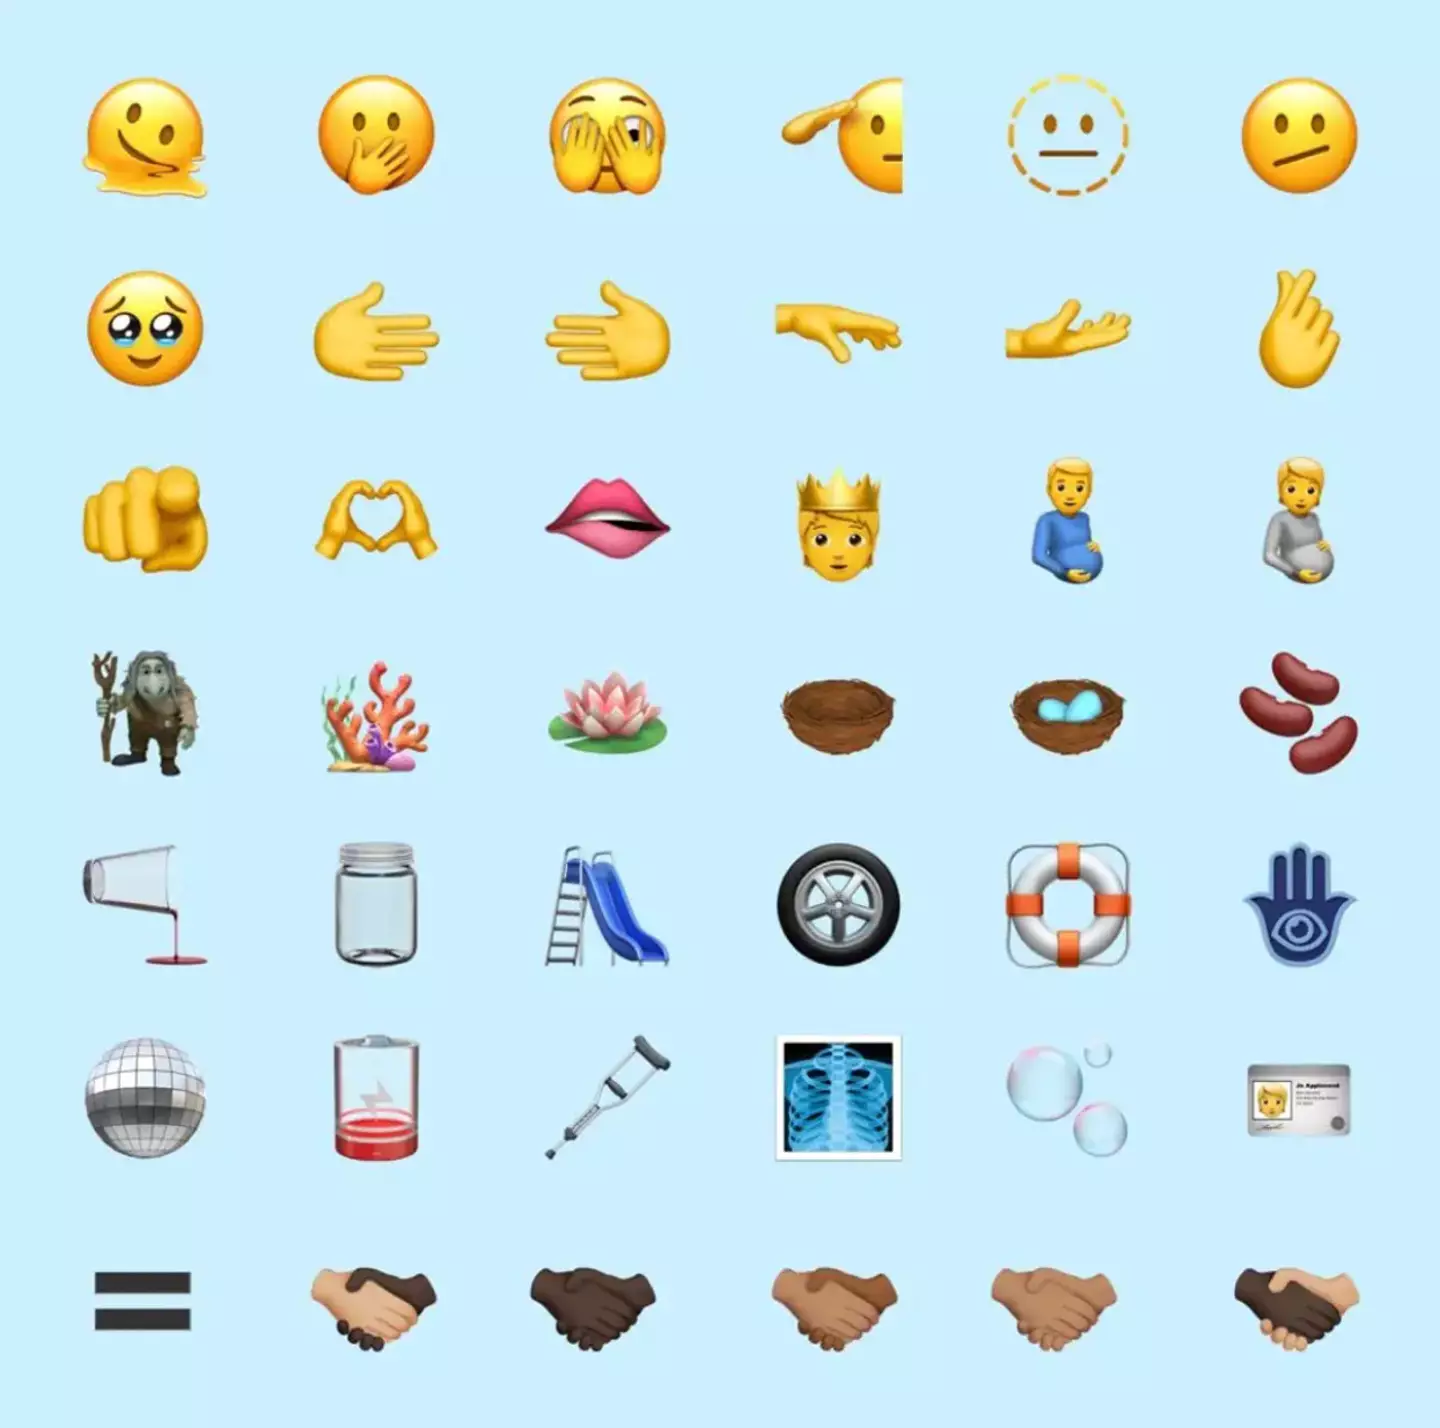 Apple has introduced 123 new emojis (